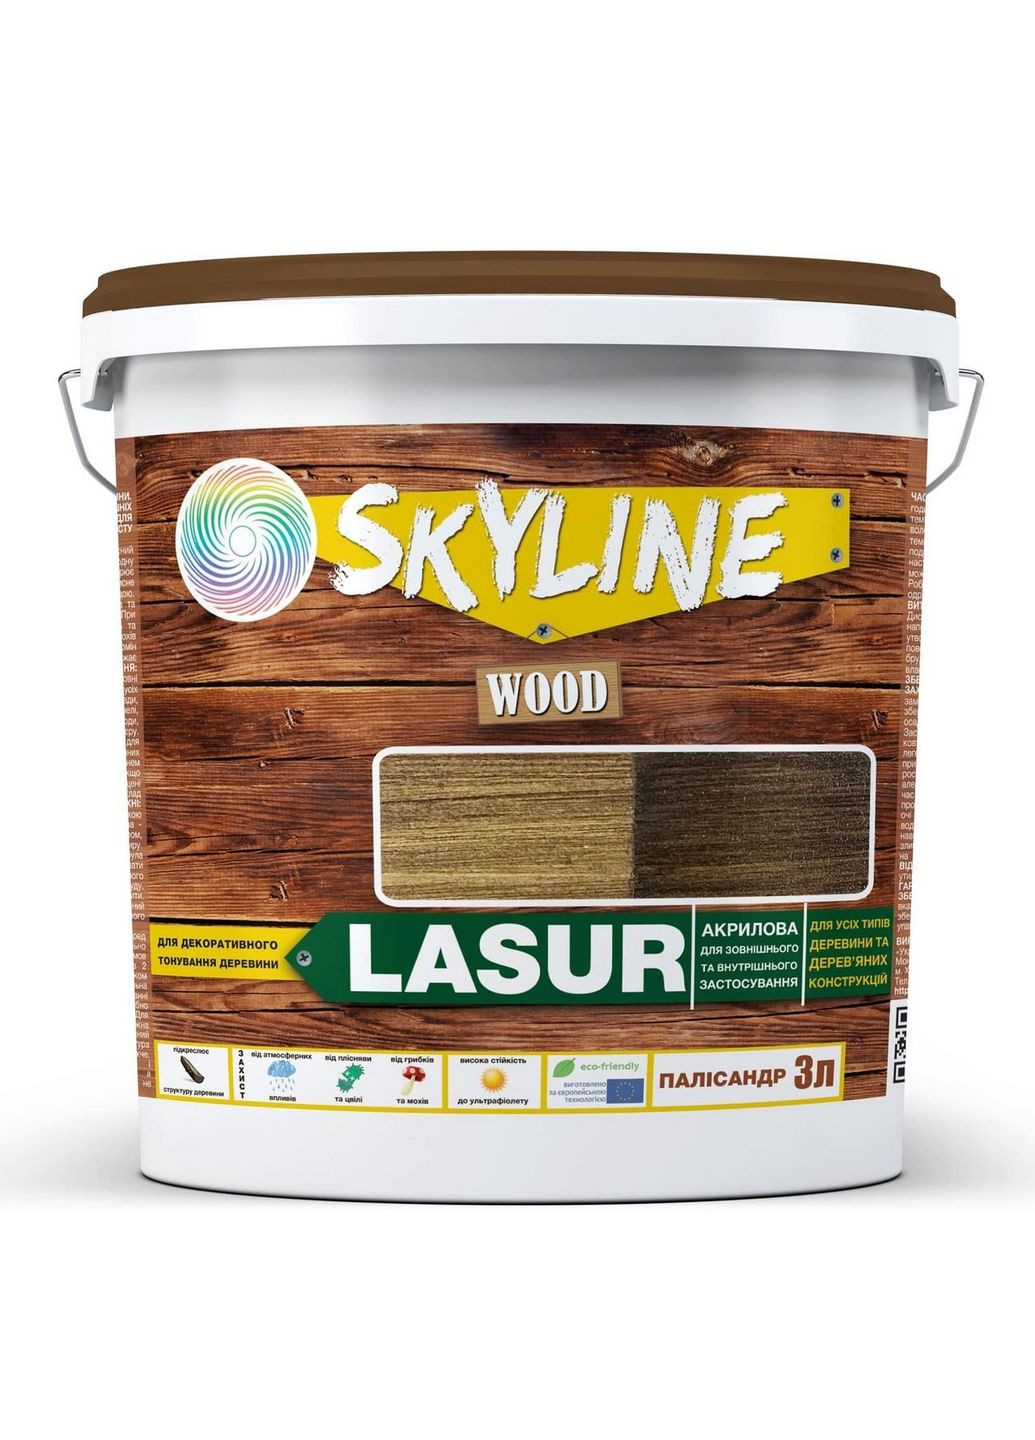 Лазурь декоративно-защитная для обработки дерева LASUR Wood Палисандр 3л SkyLine (283327585)